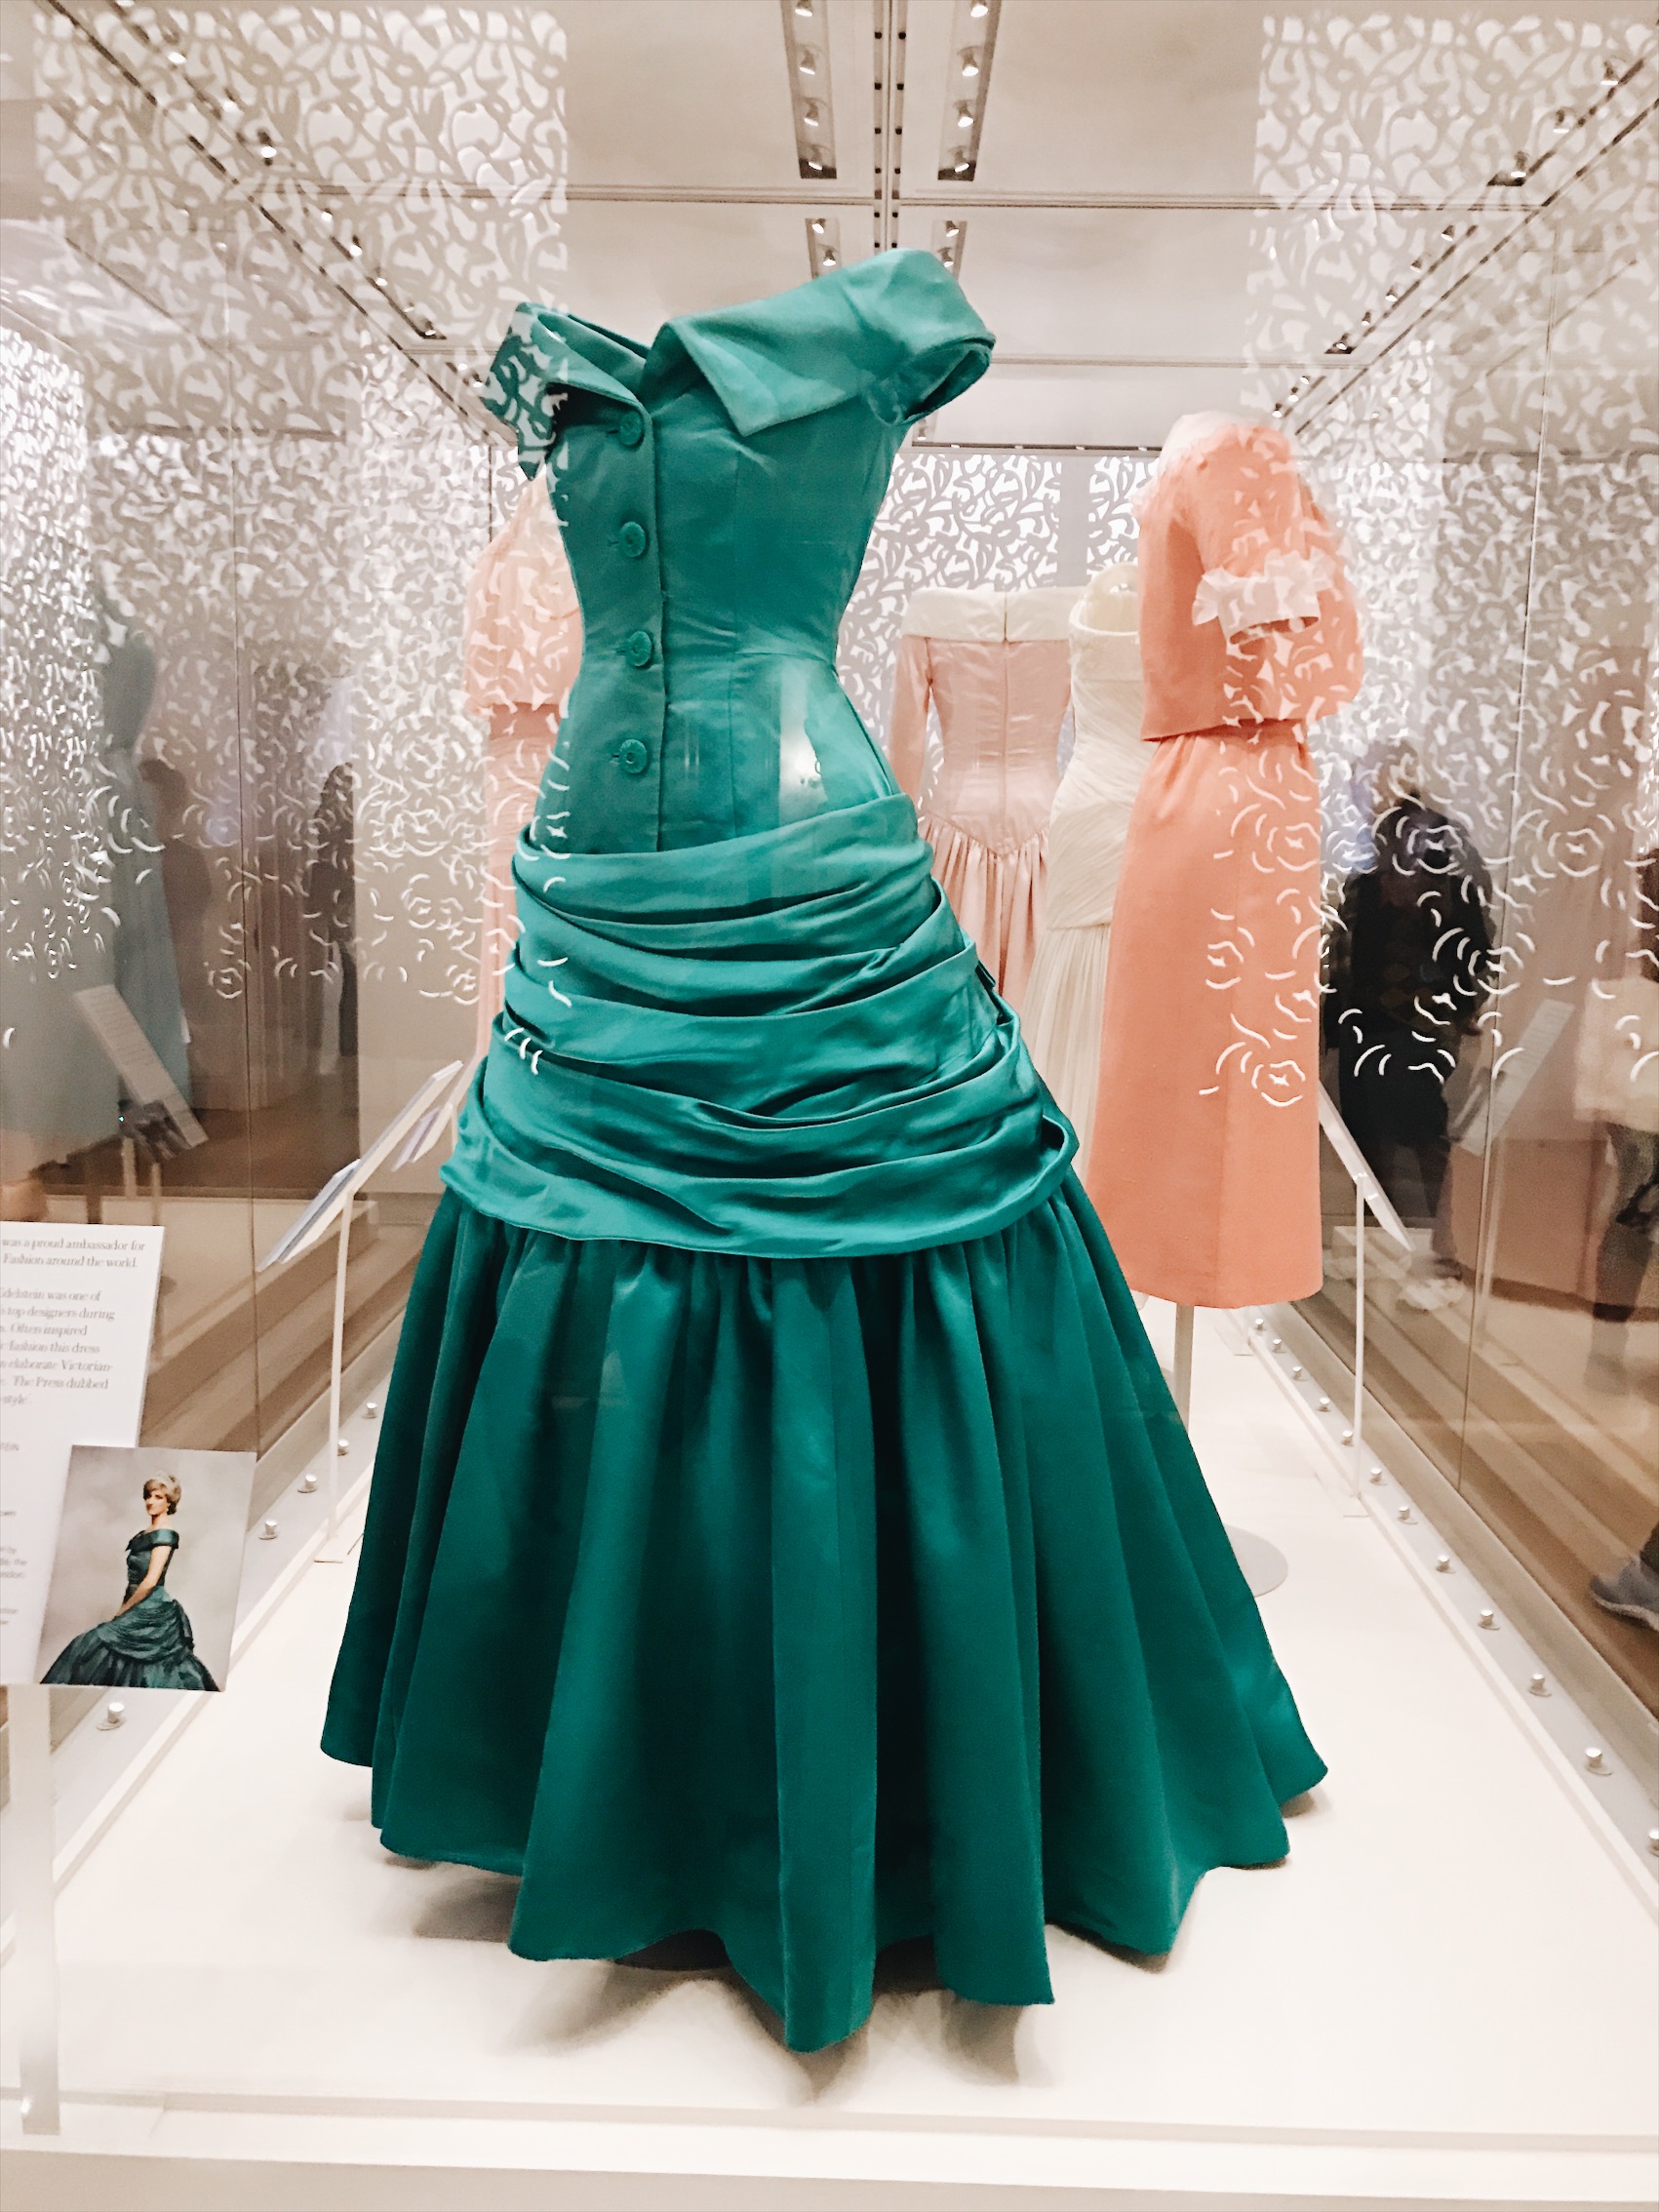 Princess Diana: Her Fashion Story, Princess Diana, fashion exhibit, Kensington Palace, London, UK, United Kingdom